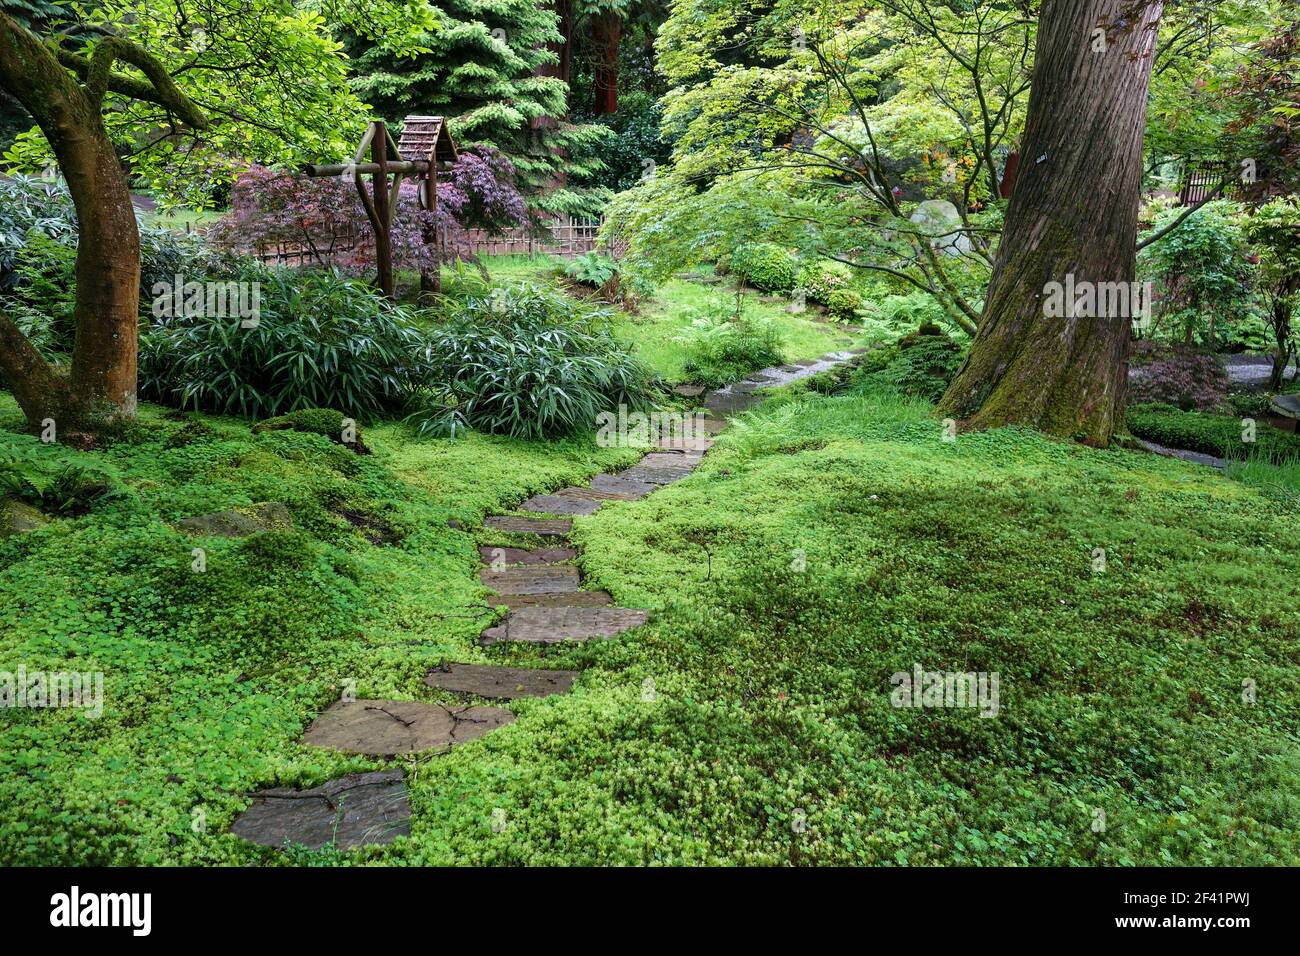 A winding path through the Japanese Garden at Tatton Park, Cheshire, England, UK Stock Photo